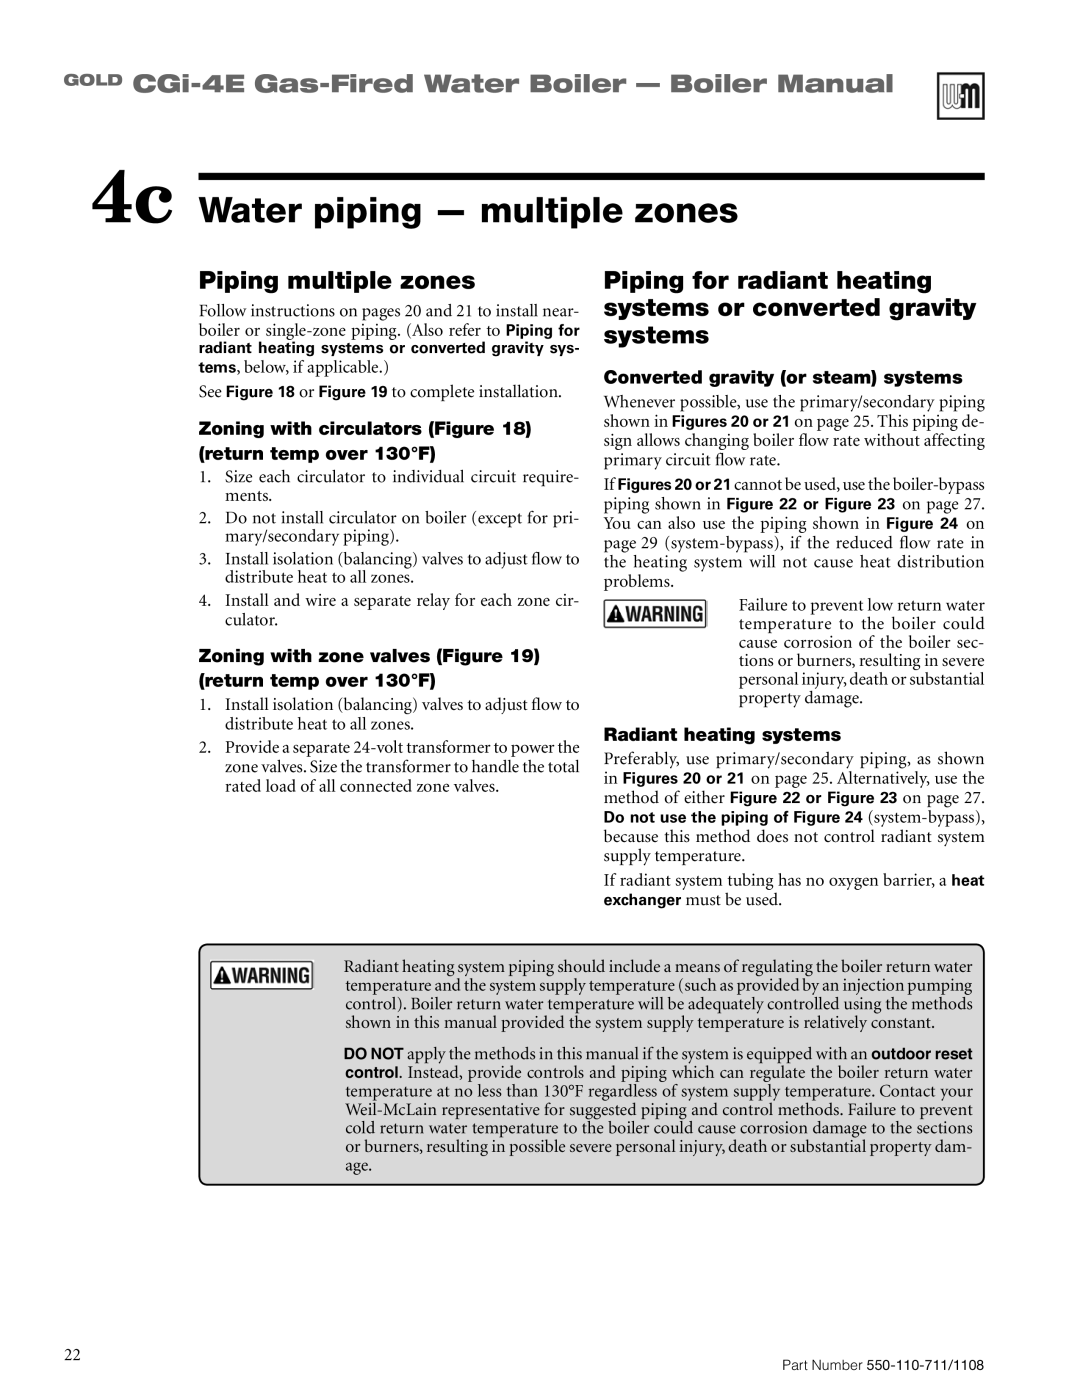 Weil-McLain CGI-4E manual 4c Water piping - multiple zones, GOLD CGi-4E Gas-FiredWater Boiler - Boiler Manual 